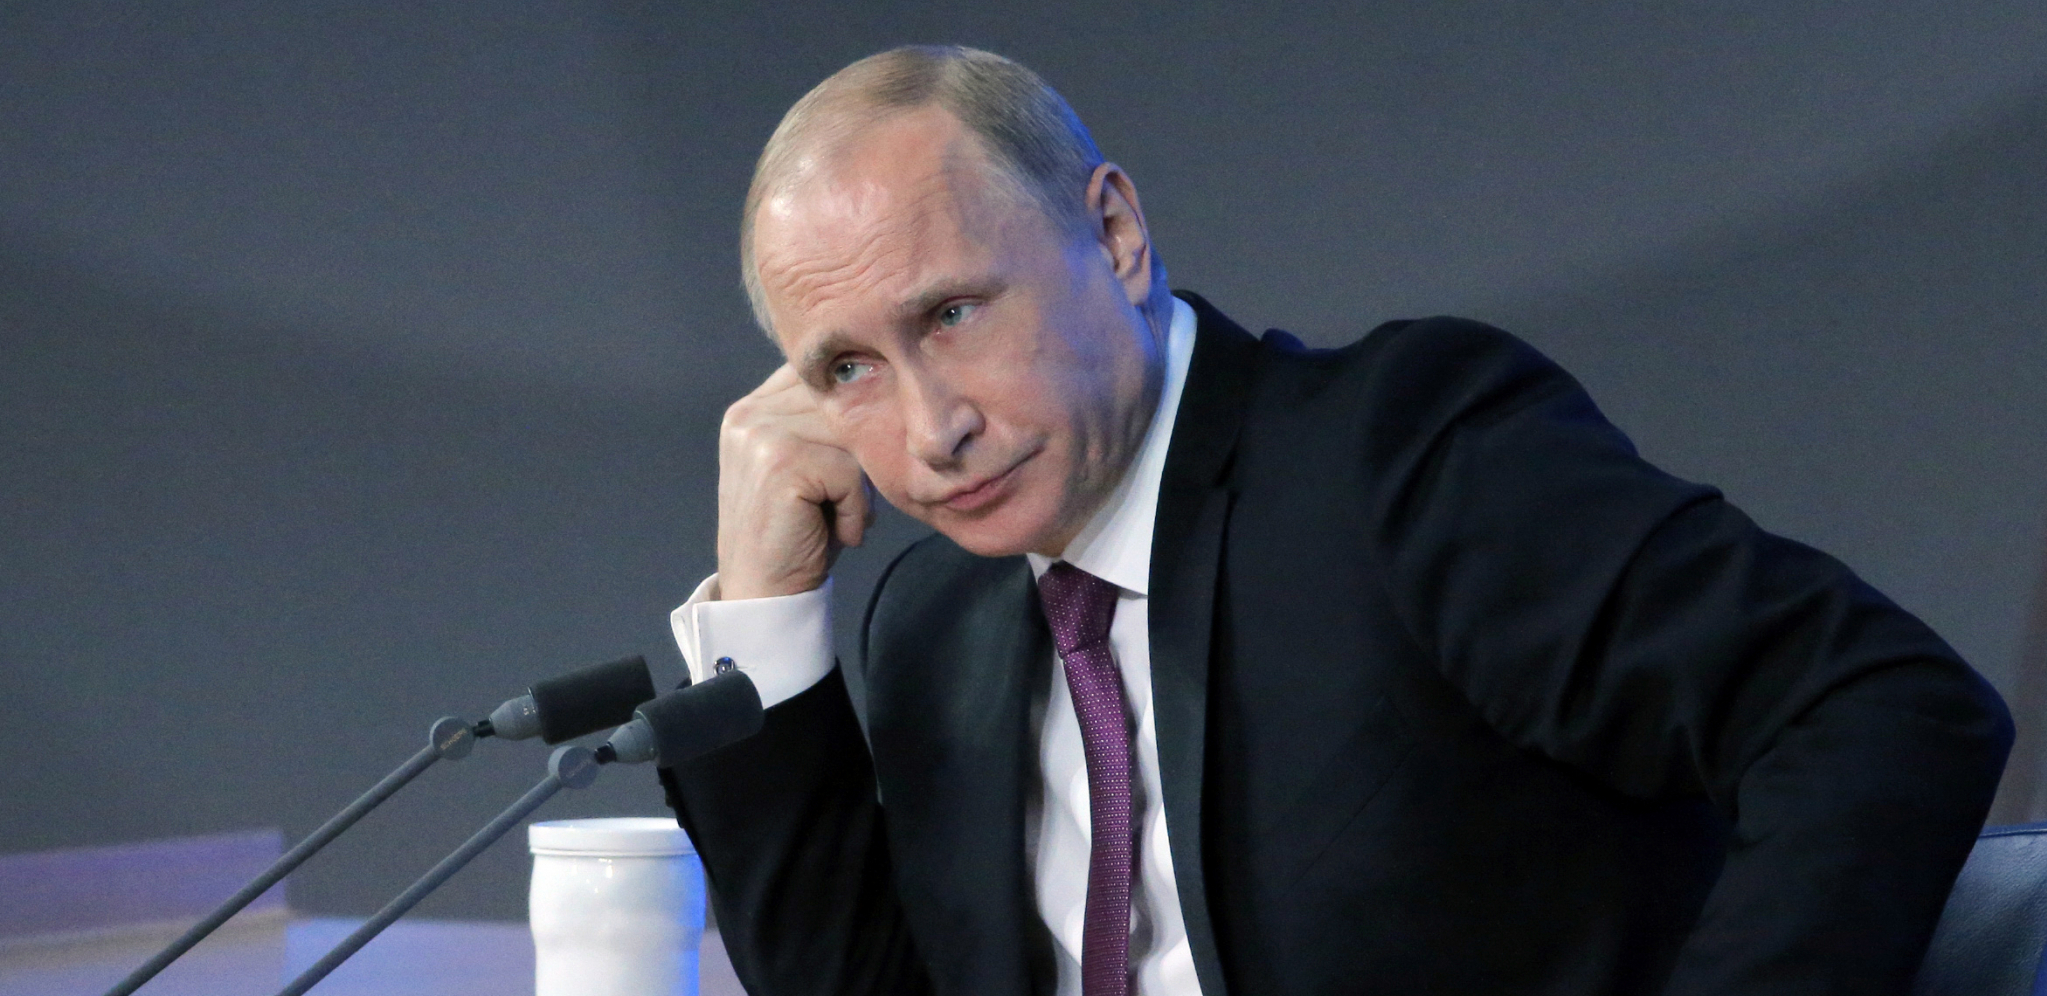 BRITANSKA OBAVEŠTAJNA SLUŽBA: Putin gubi informacijski rat, ali ne trebamo previše slaviti